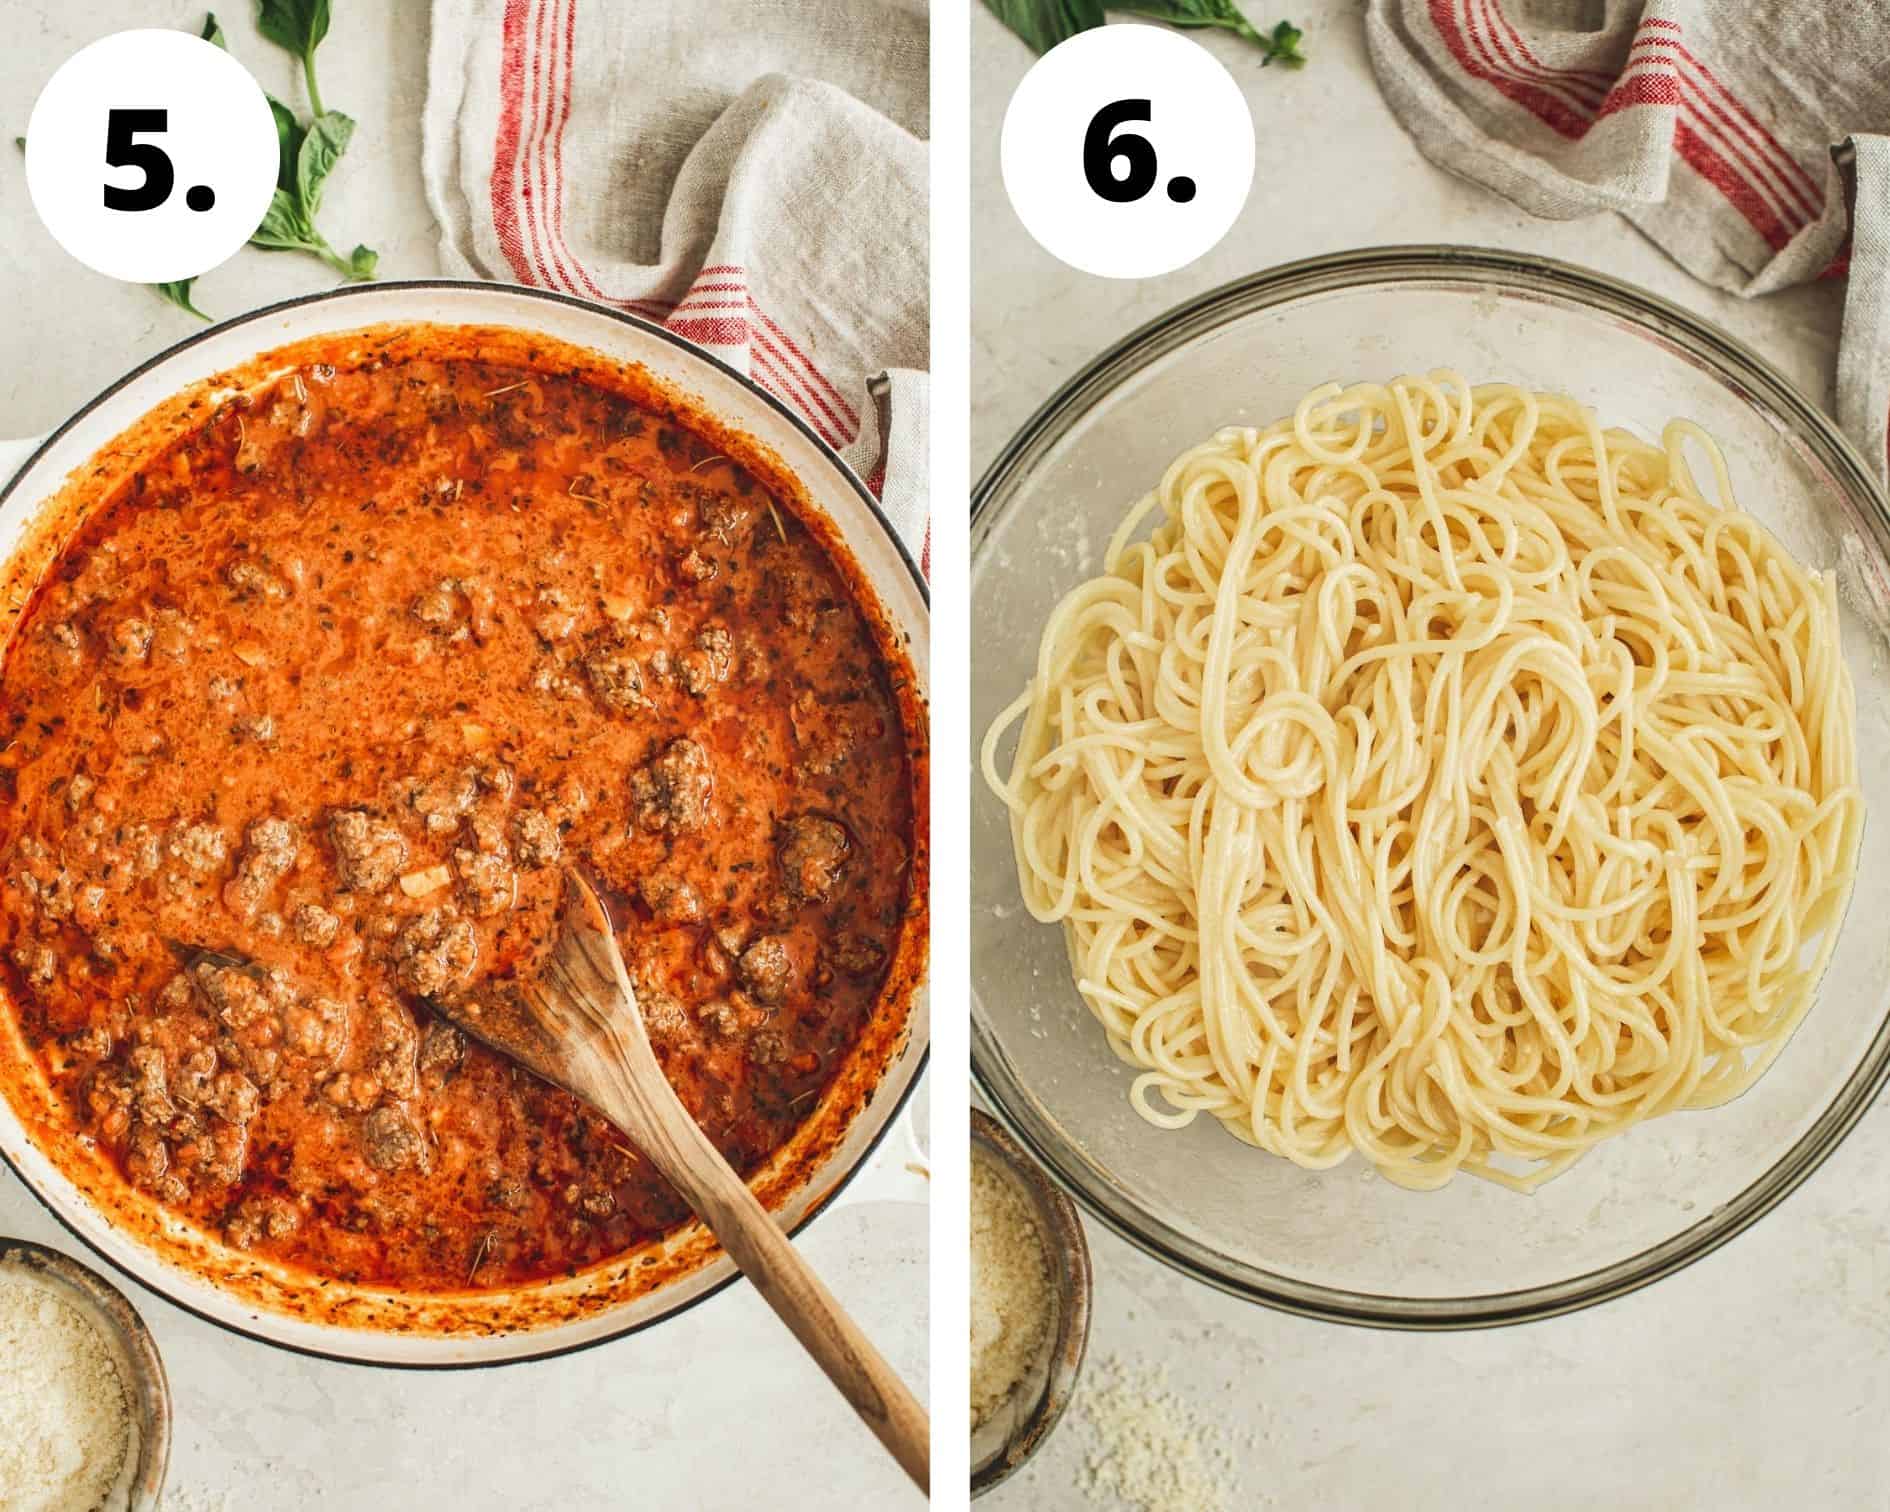 Spaghetti casserole process steps 5 and 6.